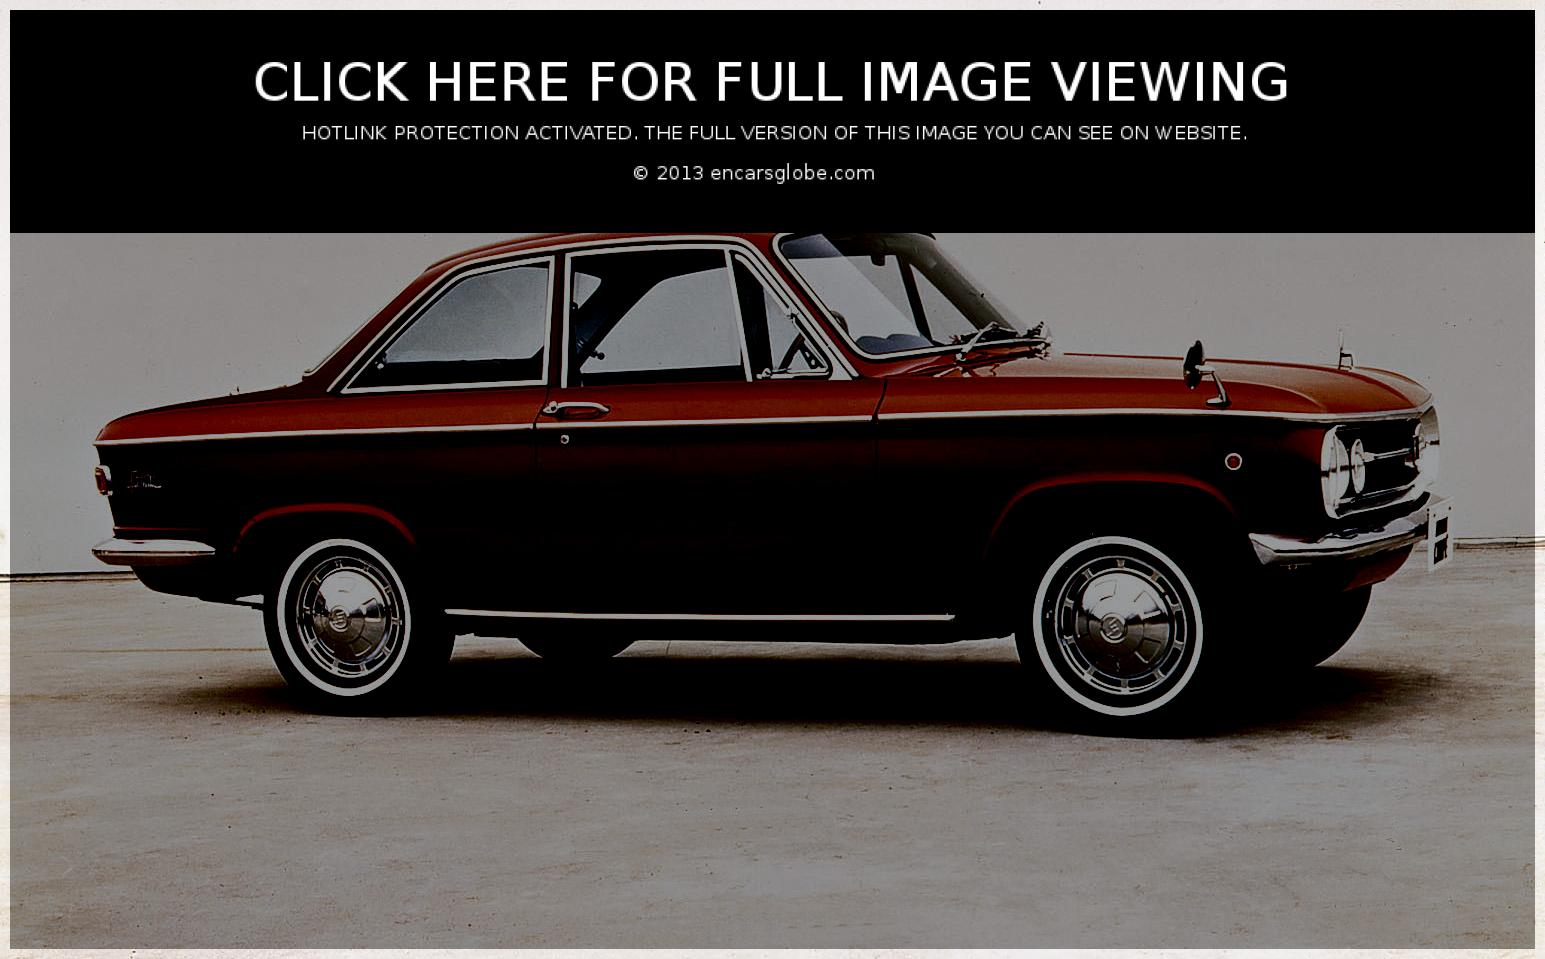 Mazda Familia XJ: Photo gallery, complete information about model ...